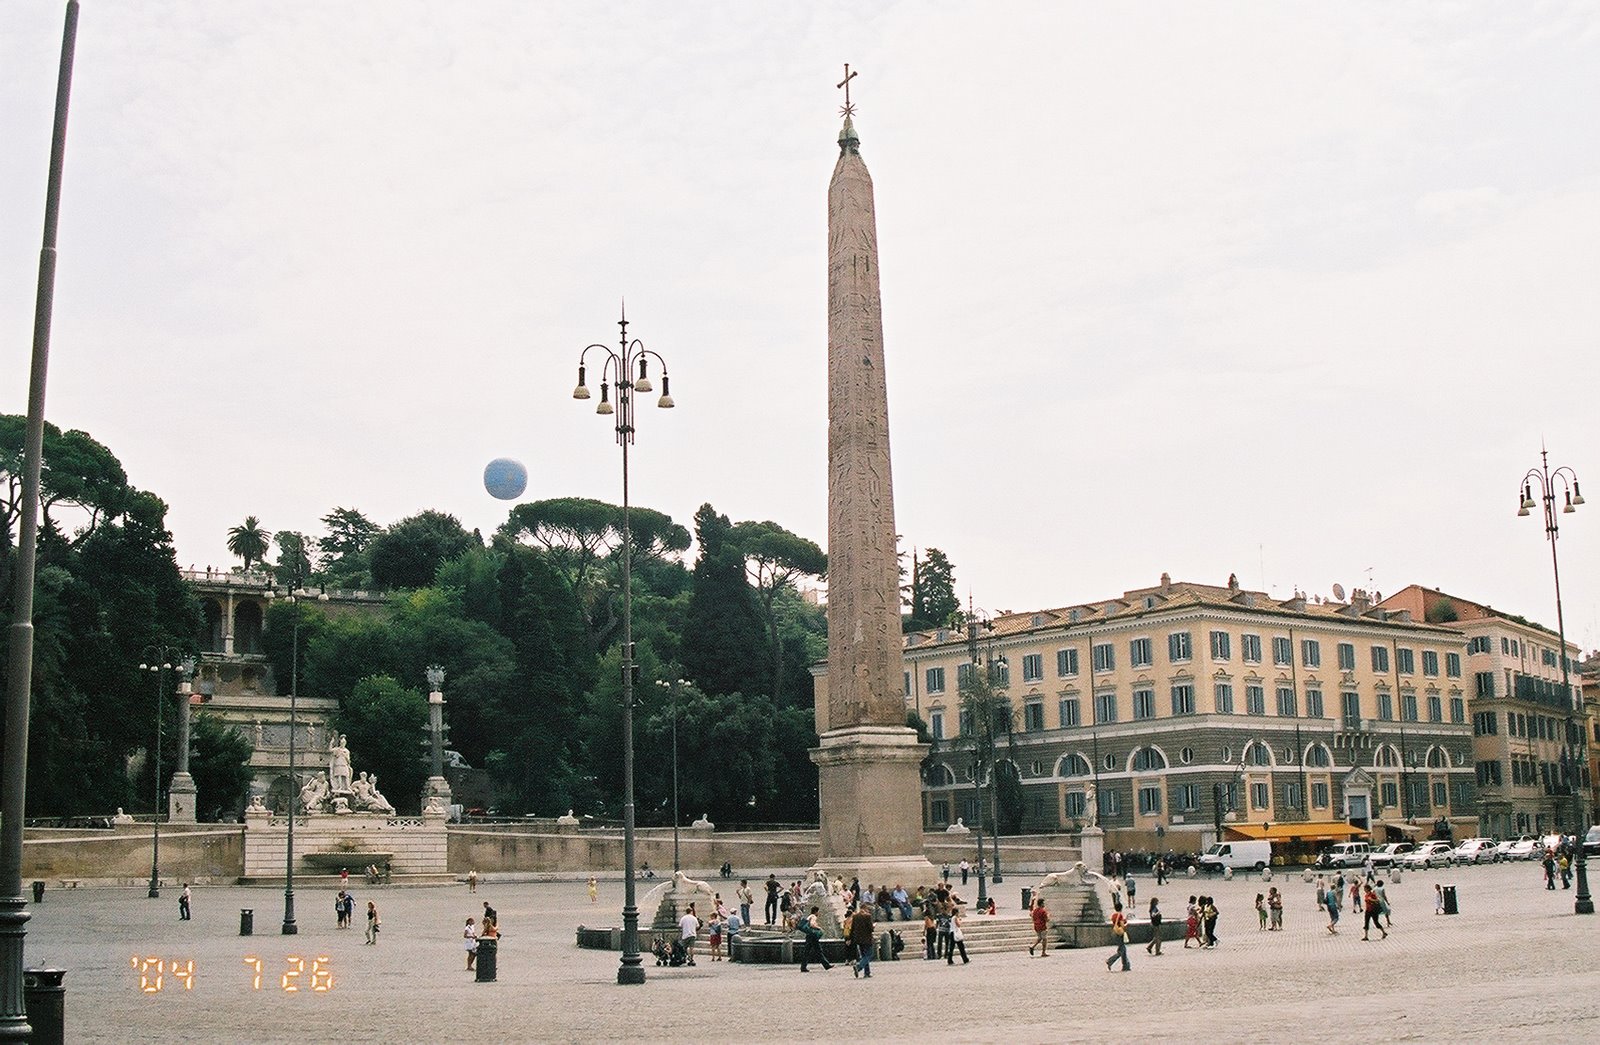 [Augustan+obelisk+taken+from+Circ+Max+in+Piazza+del+Pop+Rome+7+2004.jpg]